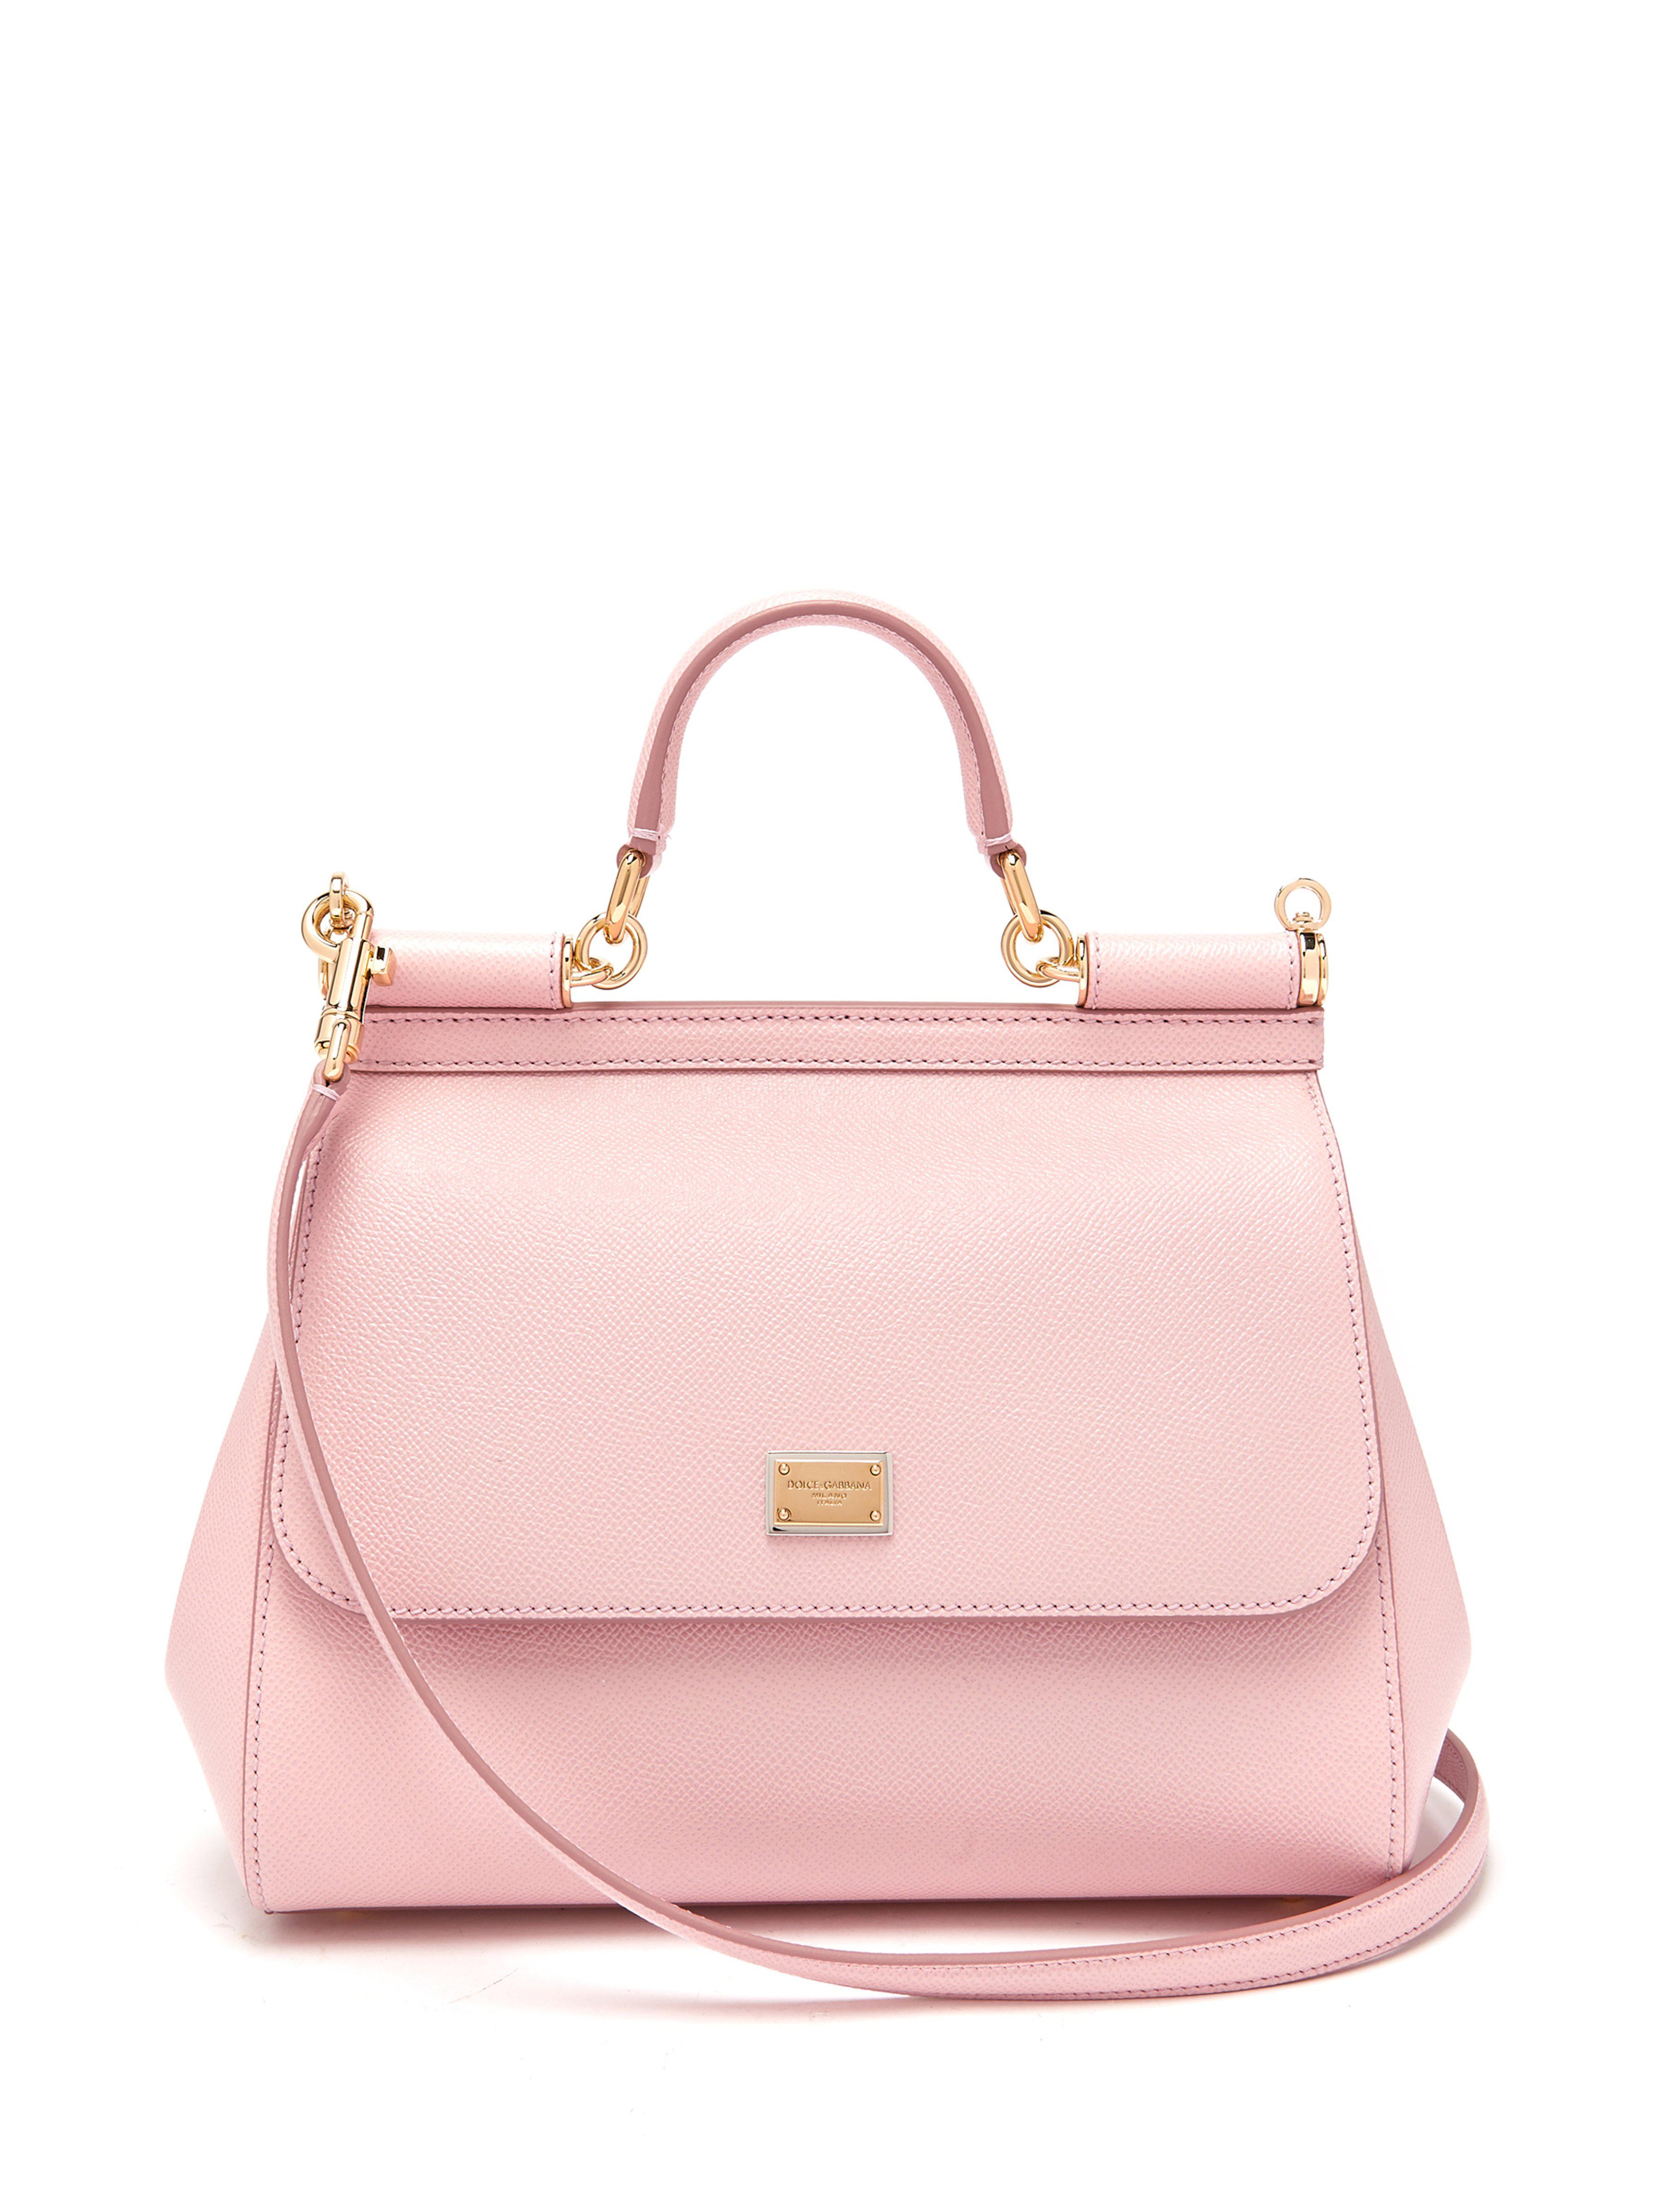 Dolce & Gabbana Sicily Medium Dauphine Leather Bag in Pink - Save 2% - Lyst